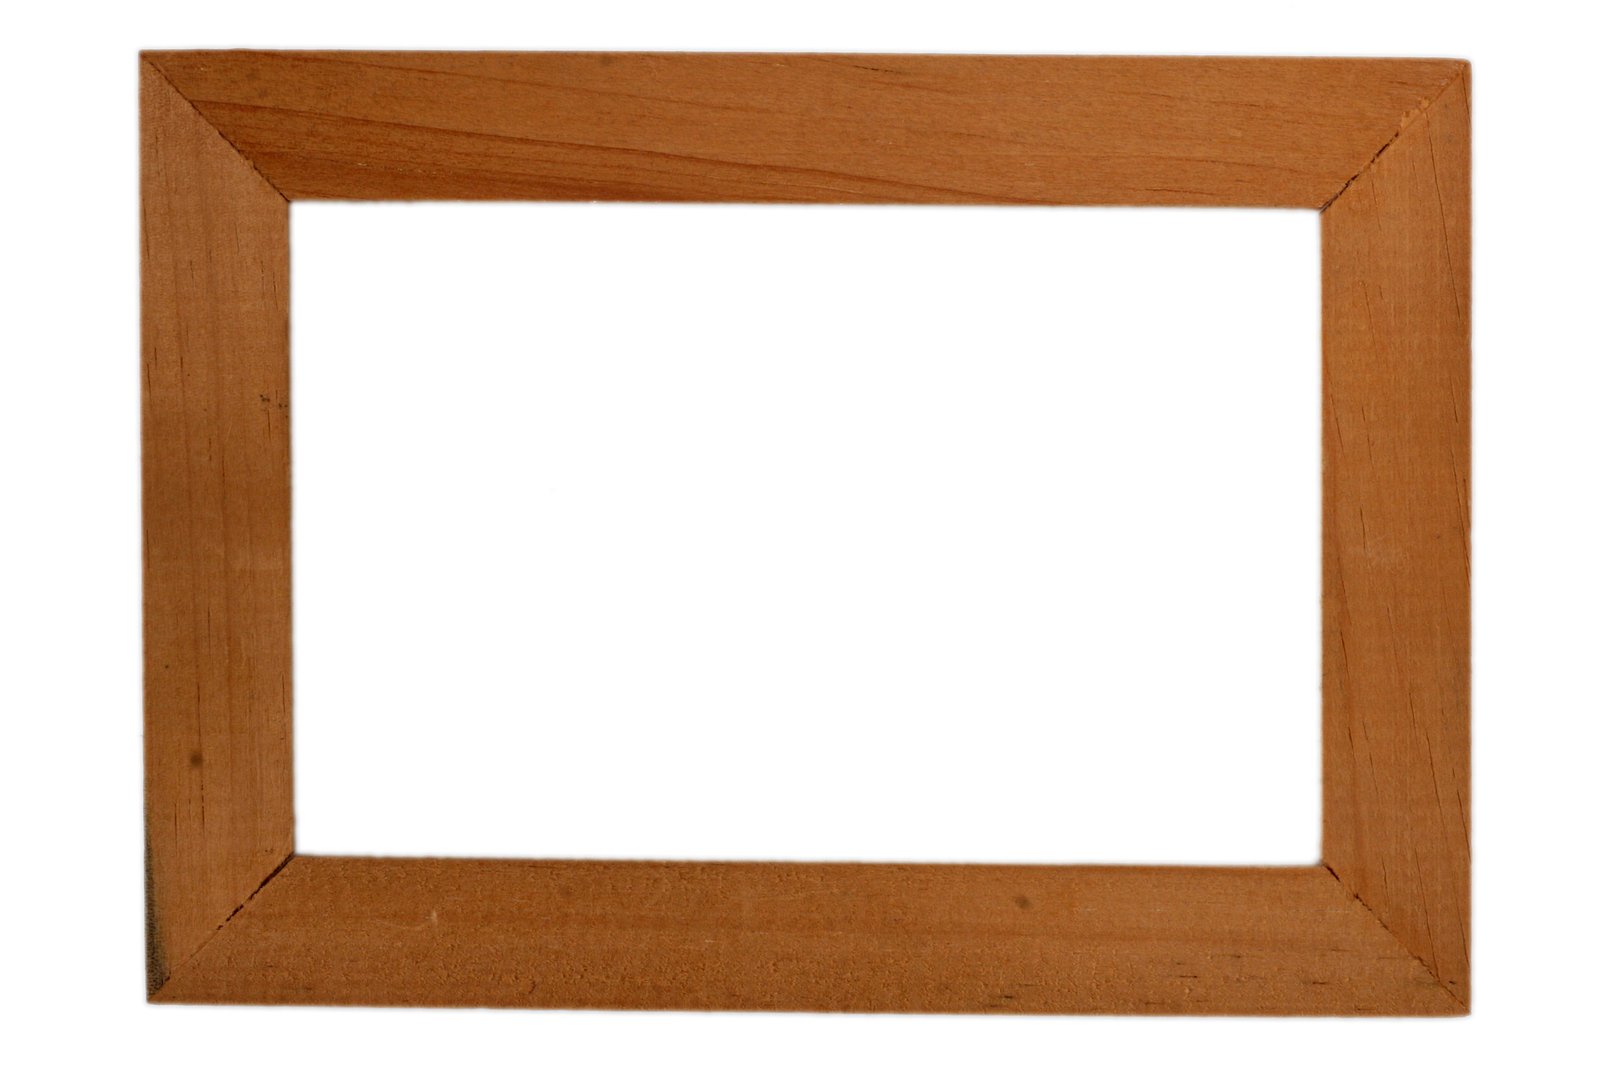 a po frame on a white background